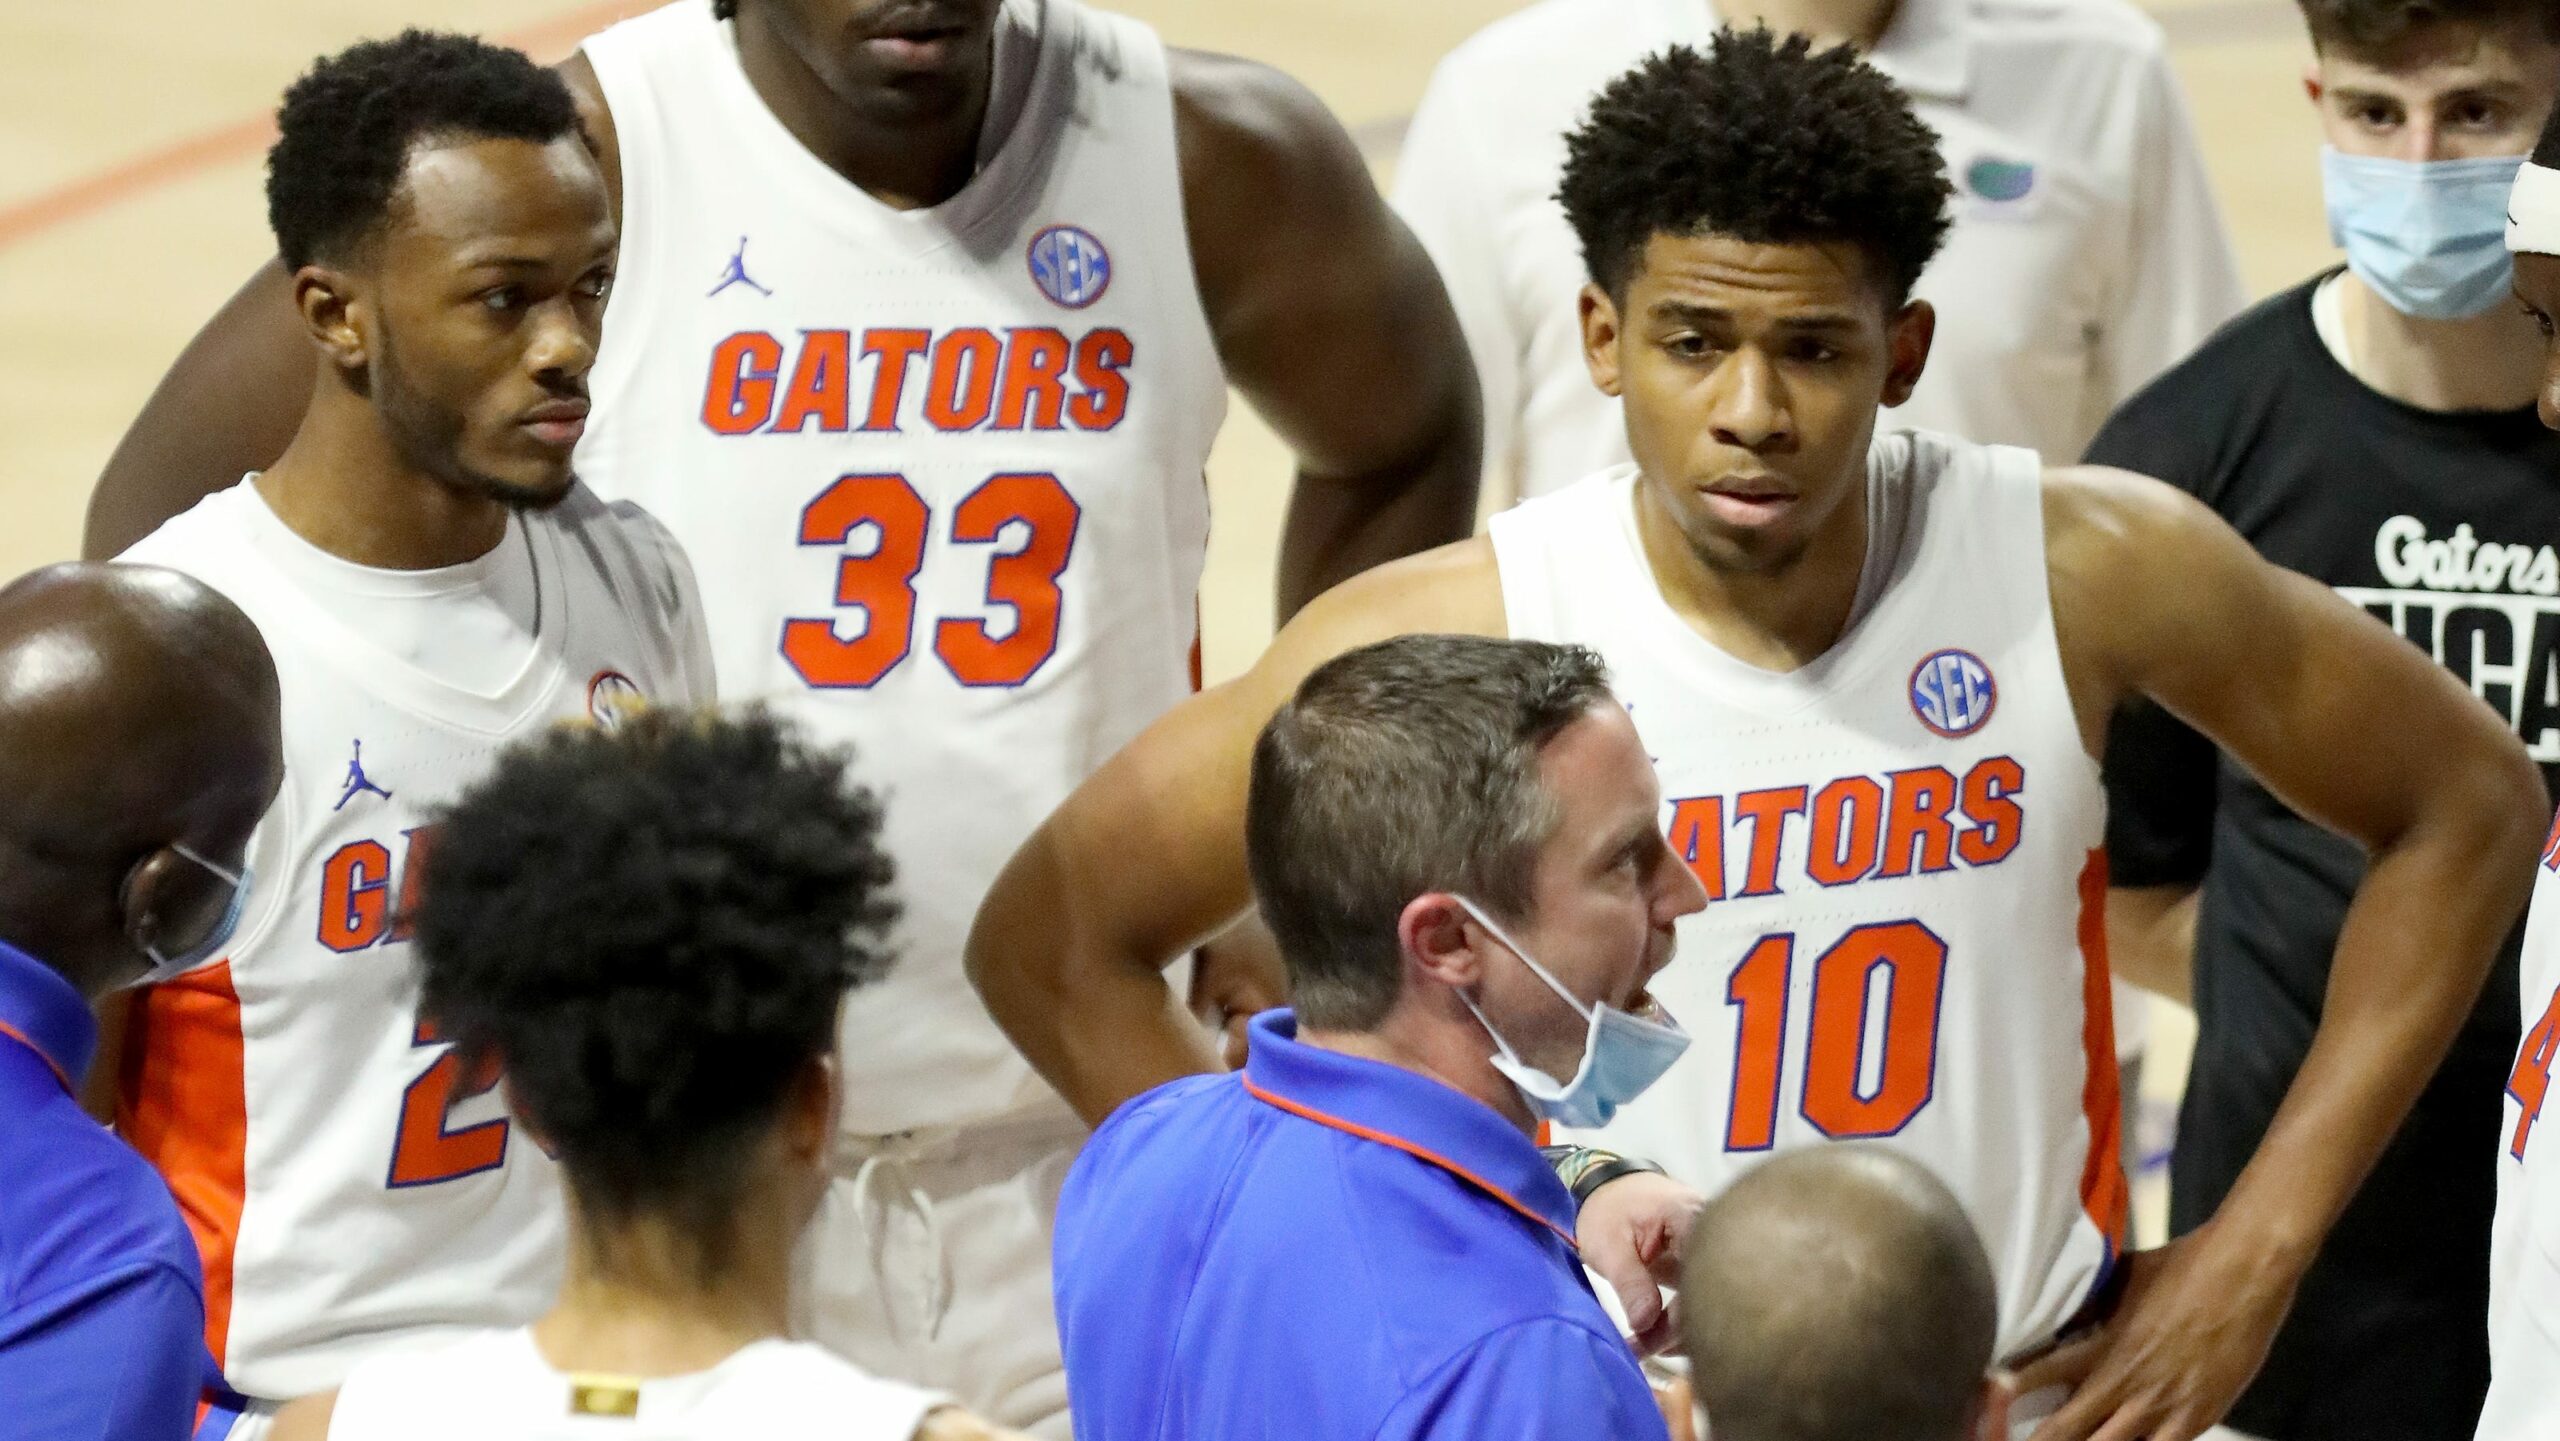 Florida basketball: CBS Bracketology has the Gators at 10-seed